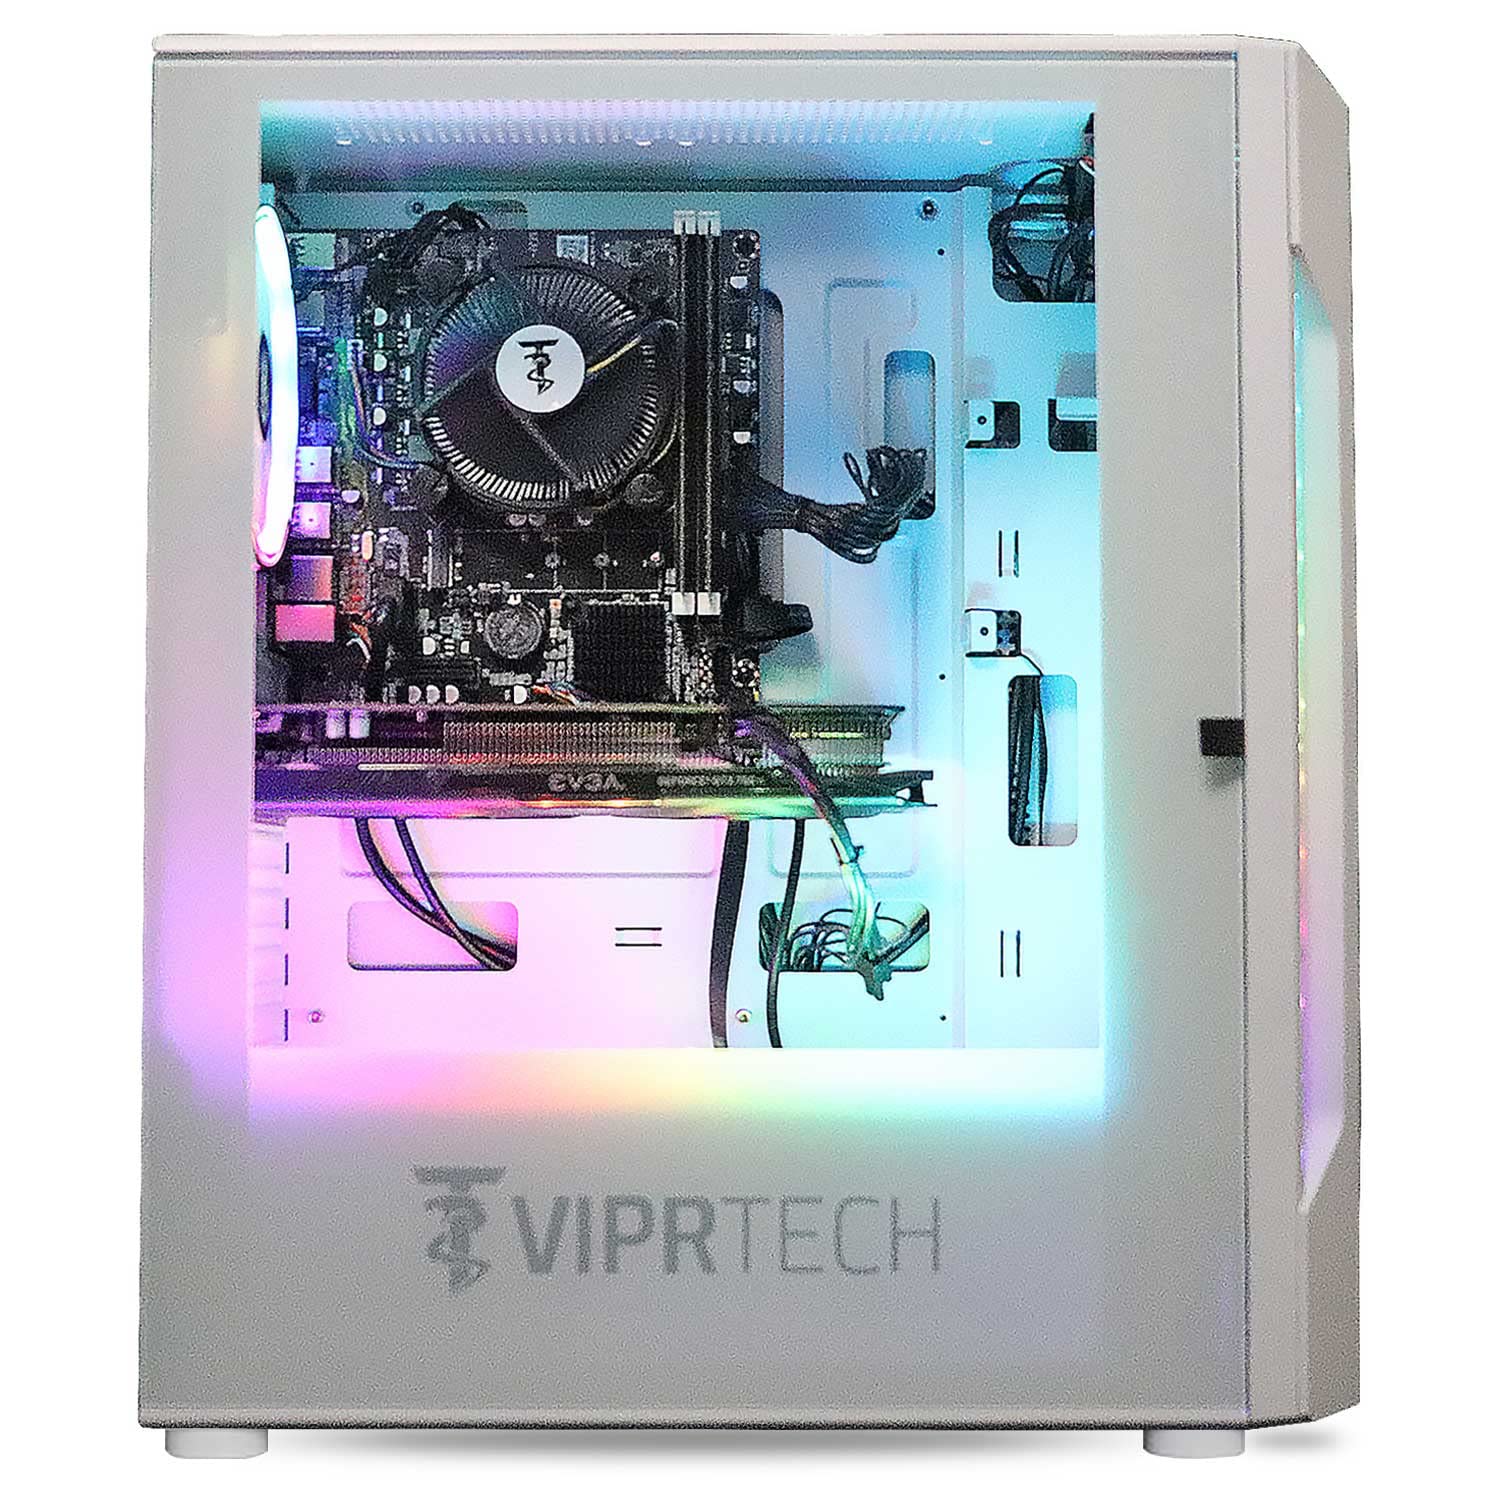 ViprTech Prime Gaming PC Computer Desktop - Intel Core i5 3rd Gen, GeForce GTX 750 4GB, 16GB RAM, 1TB HDD, WiFi, RGB Lighting, Windows 10 Pro, Streaming, Editing, White